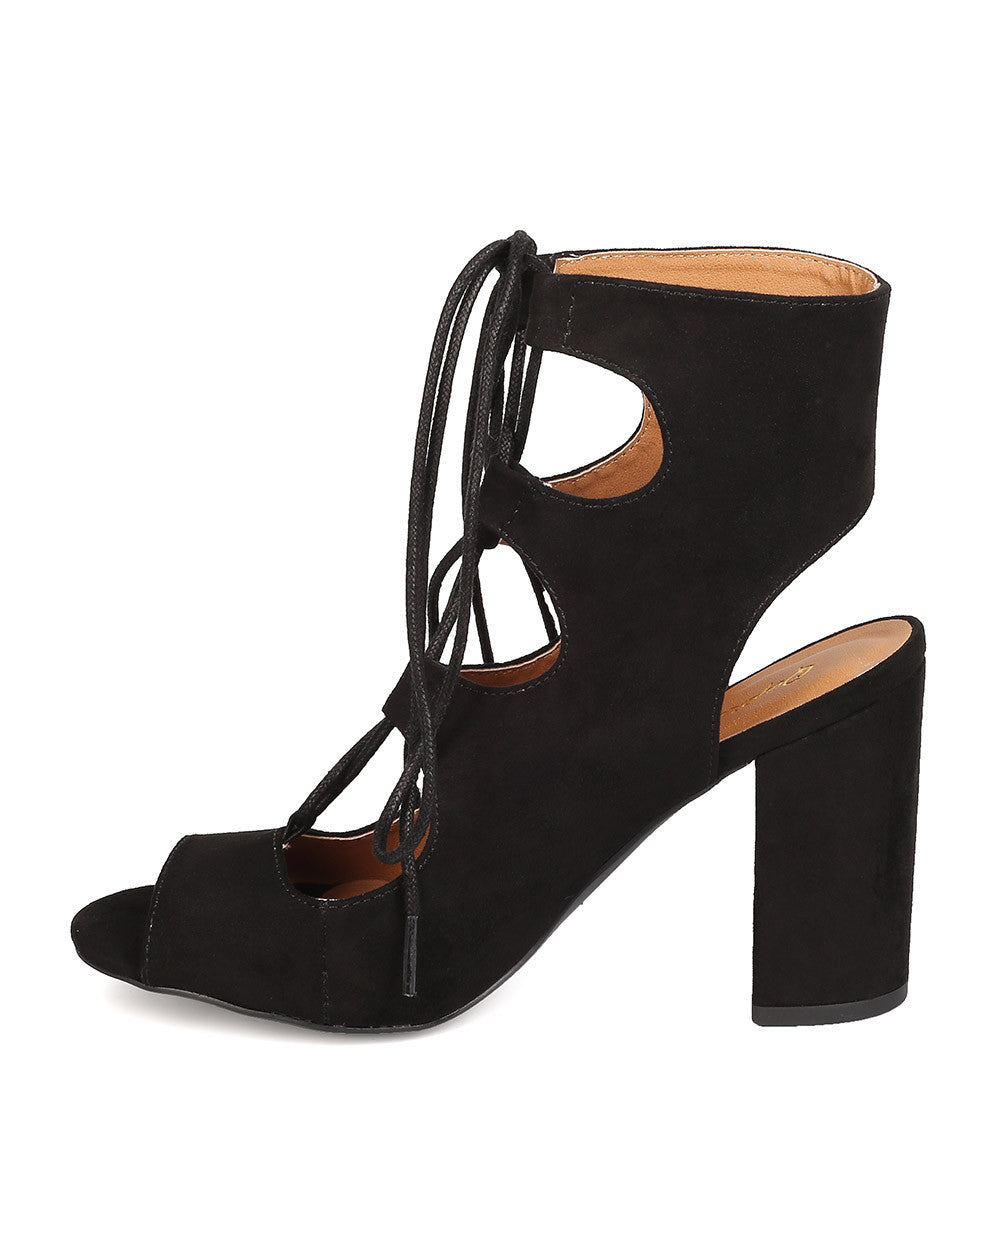 Black lace up block heels